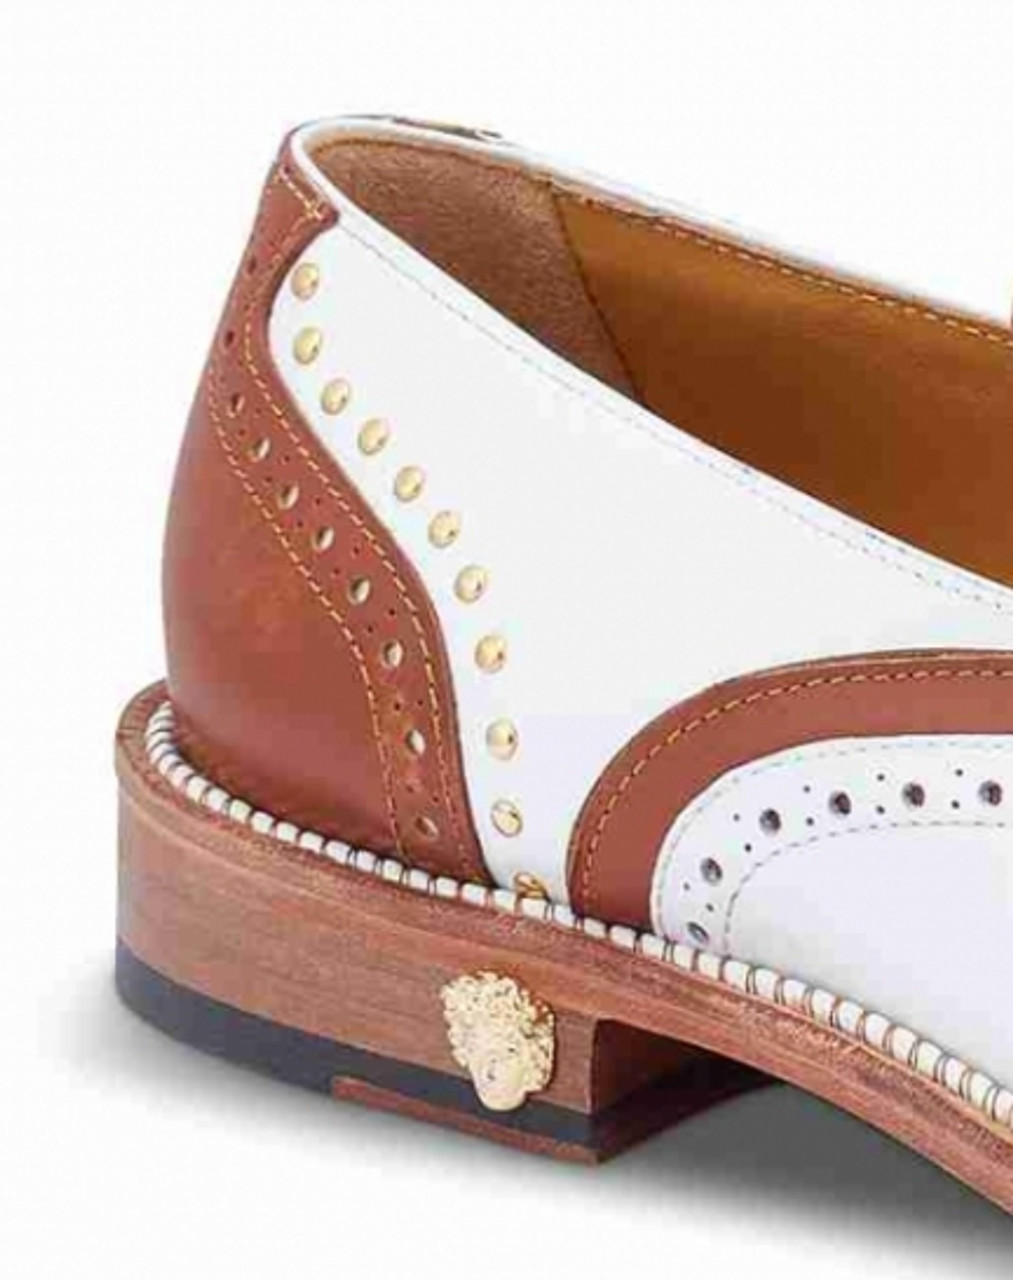 Mauri Viper 44295 Cognac Genuine Eel Crocodile Shoes